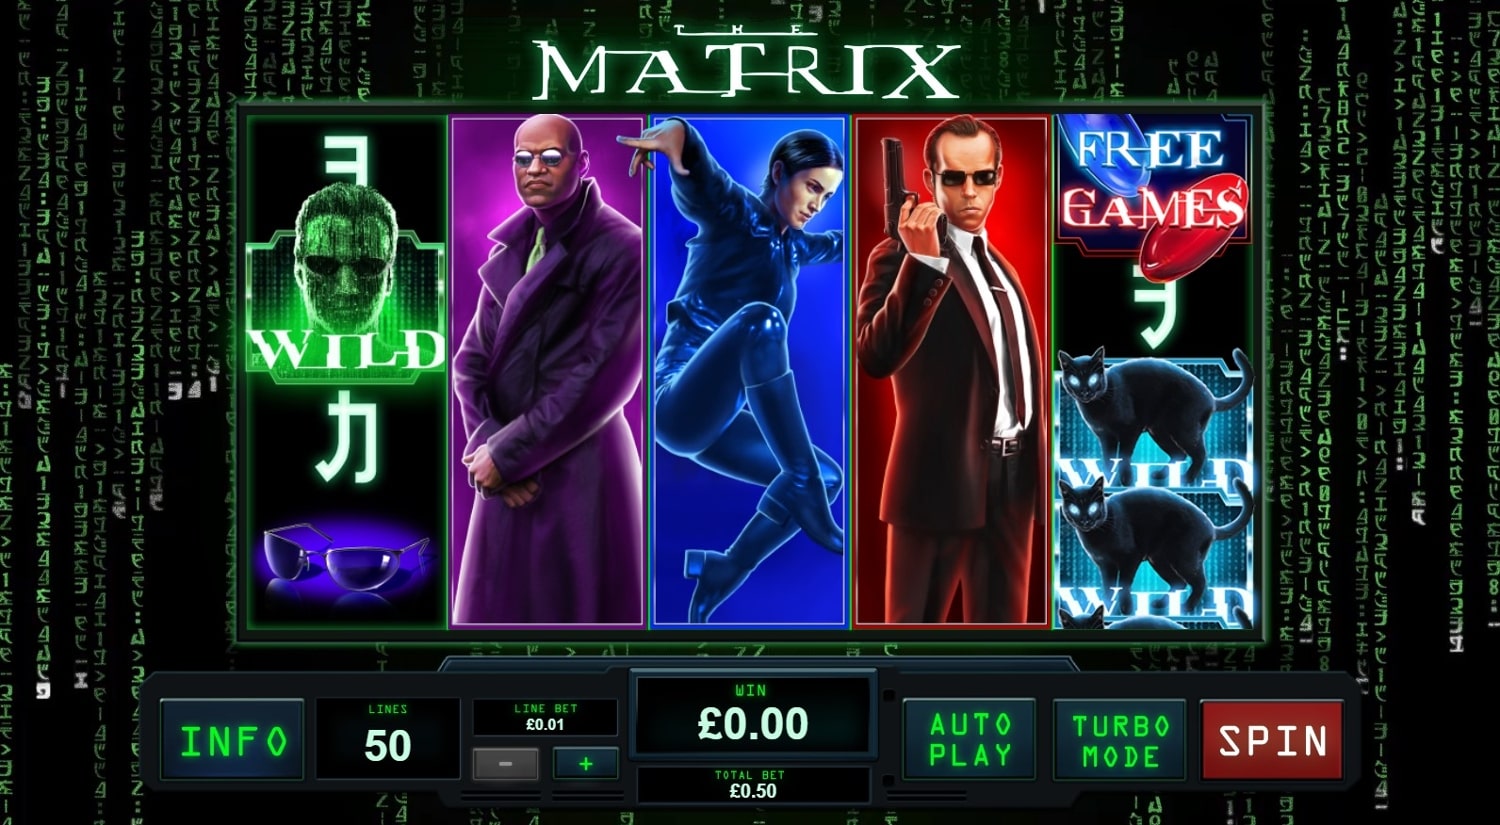 The Matrix Free Spins